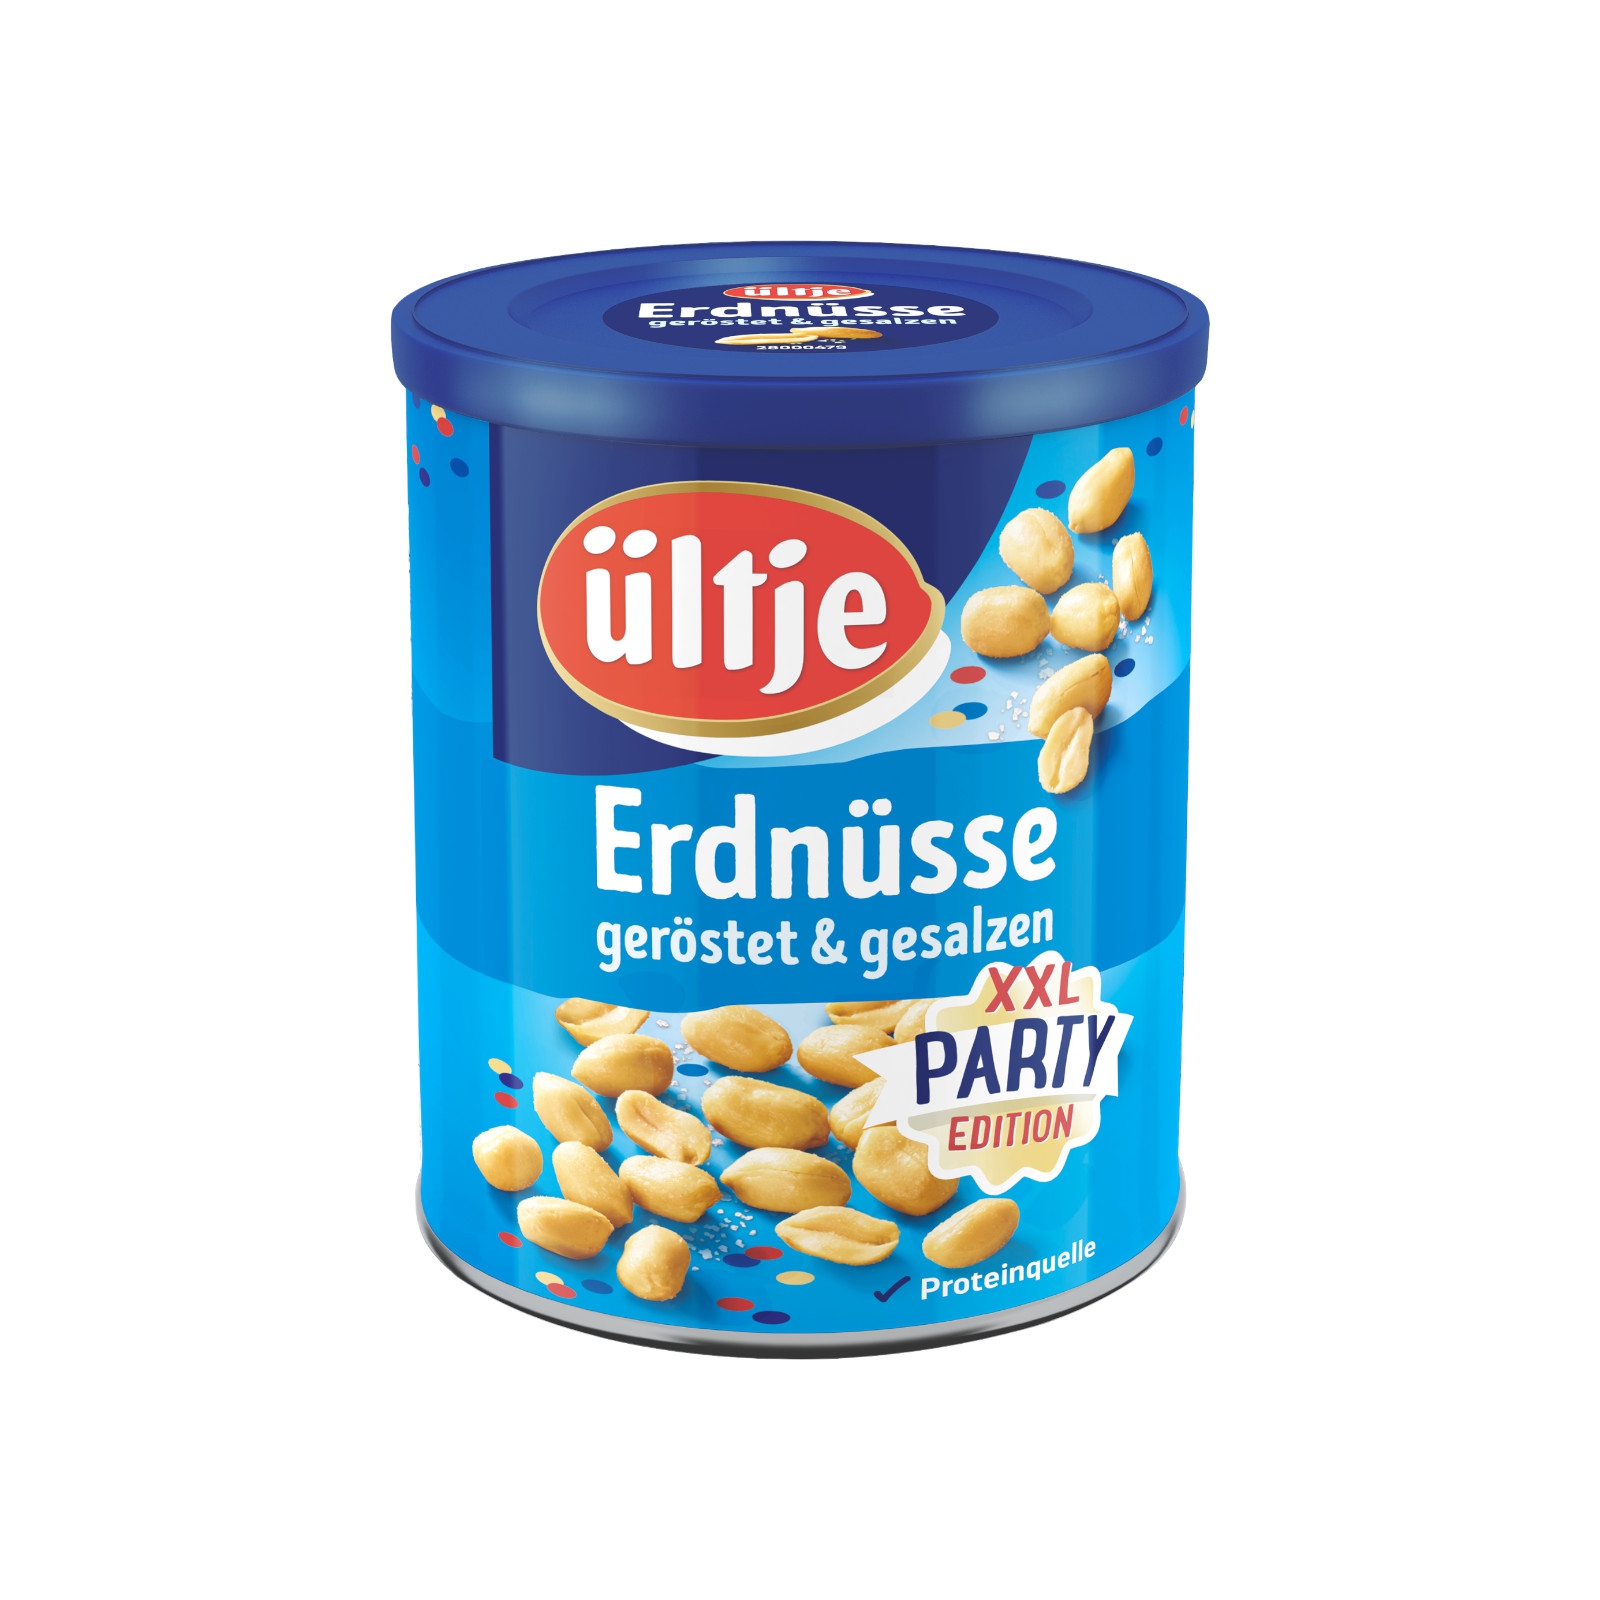 Ültje Erdnüsse geröstet & gesalzen. 450g